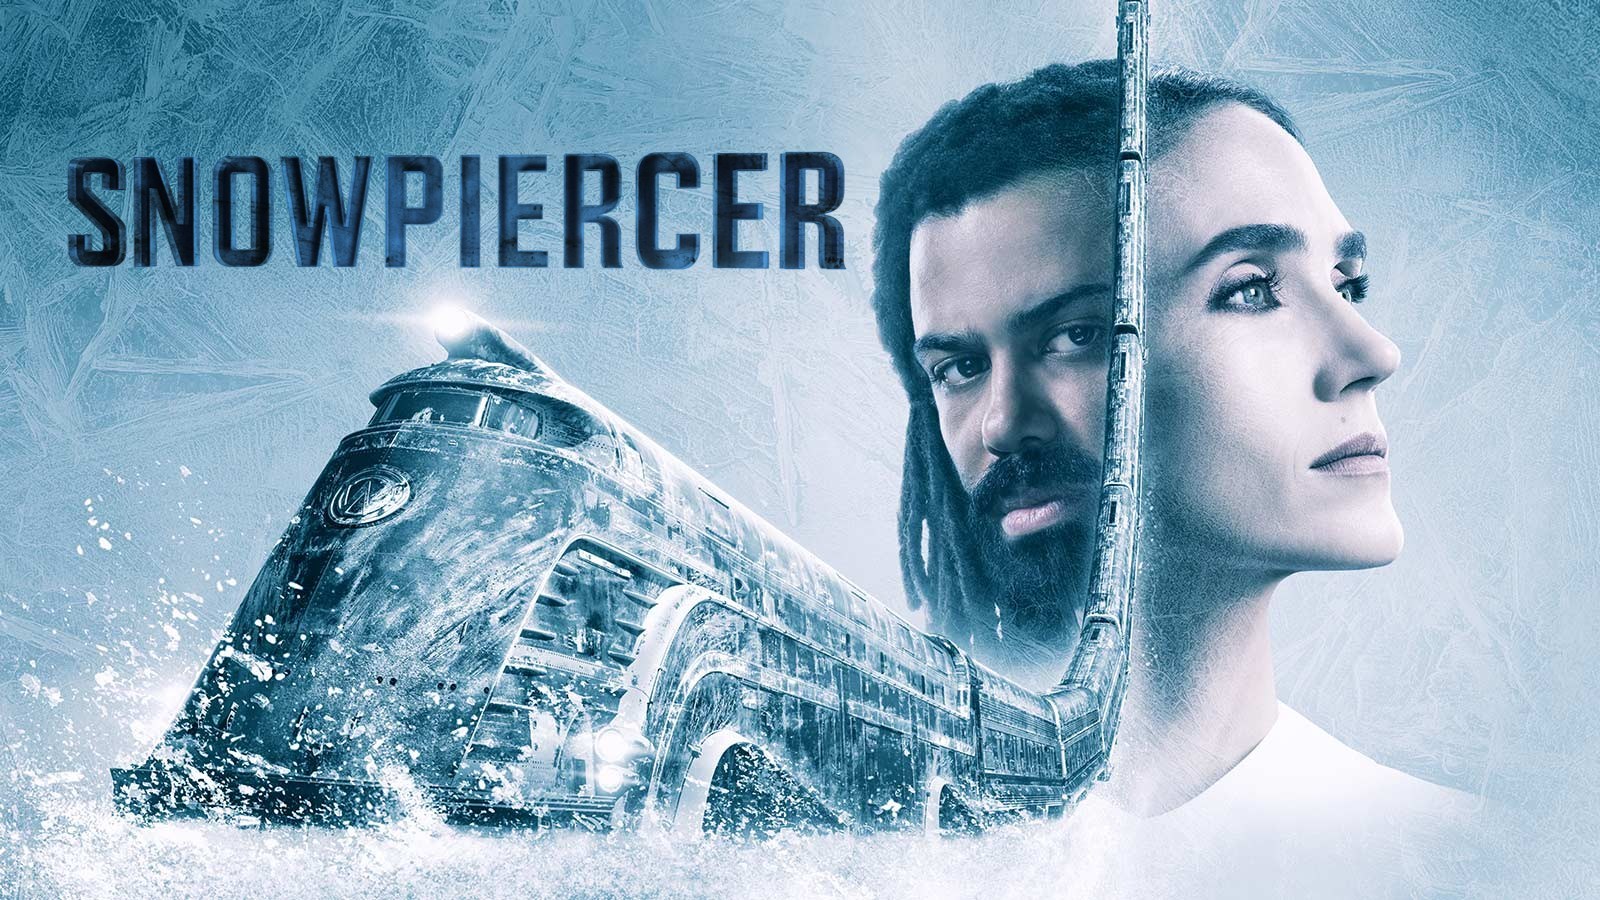 TNT’s #1 New Cable Drama ‘Snowpiercer’ Receives Third Season Order